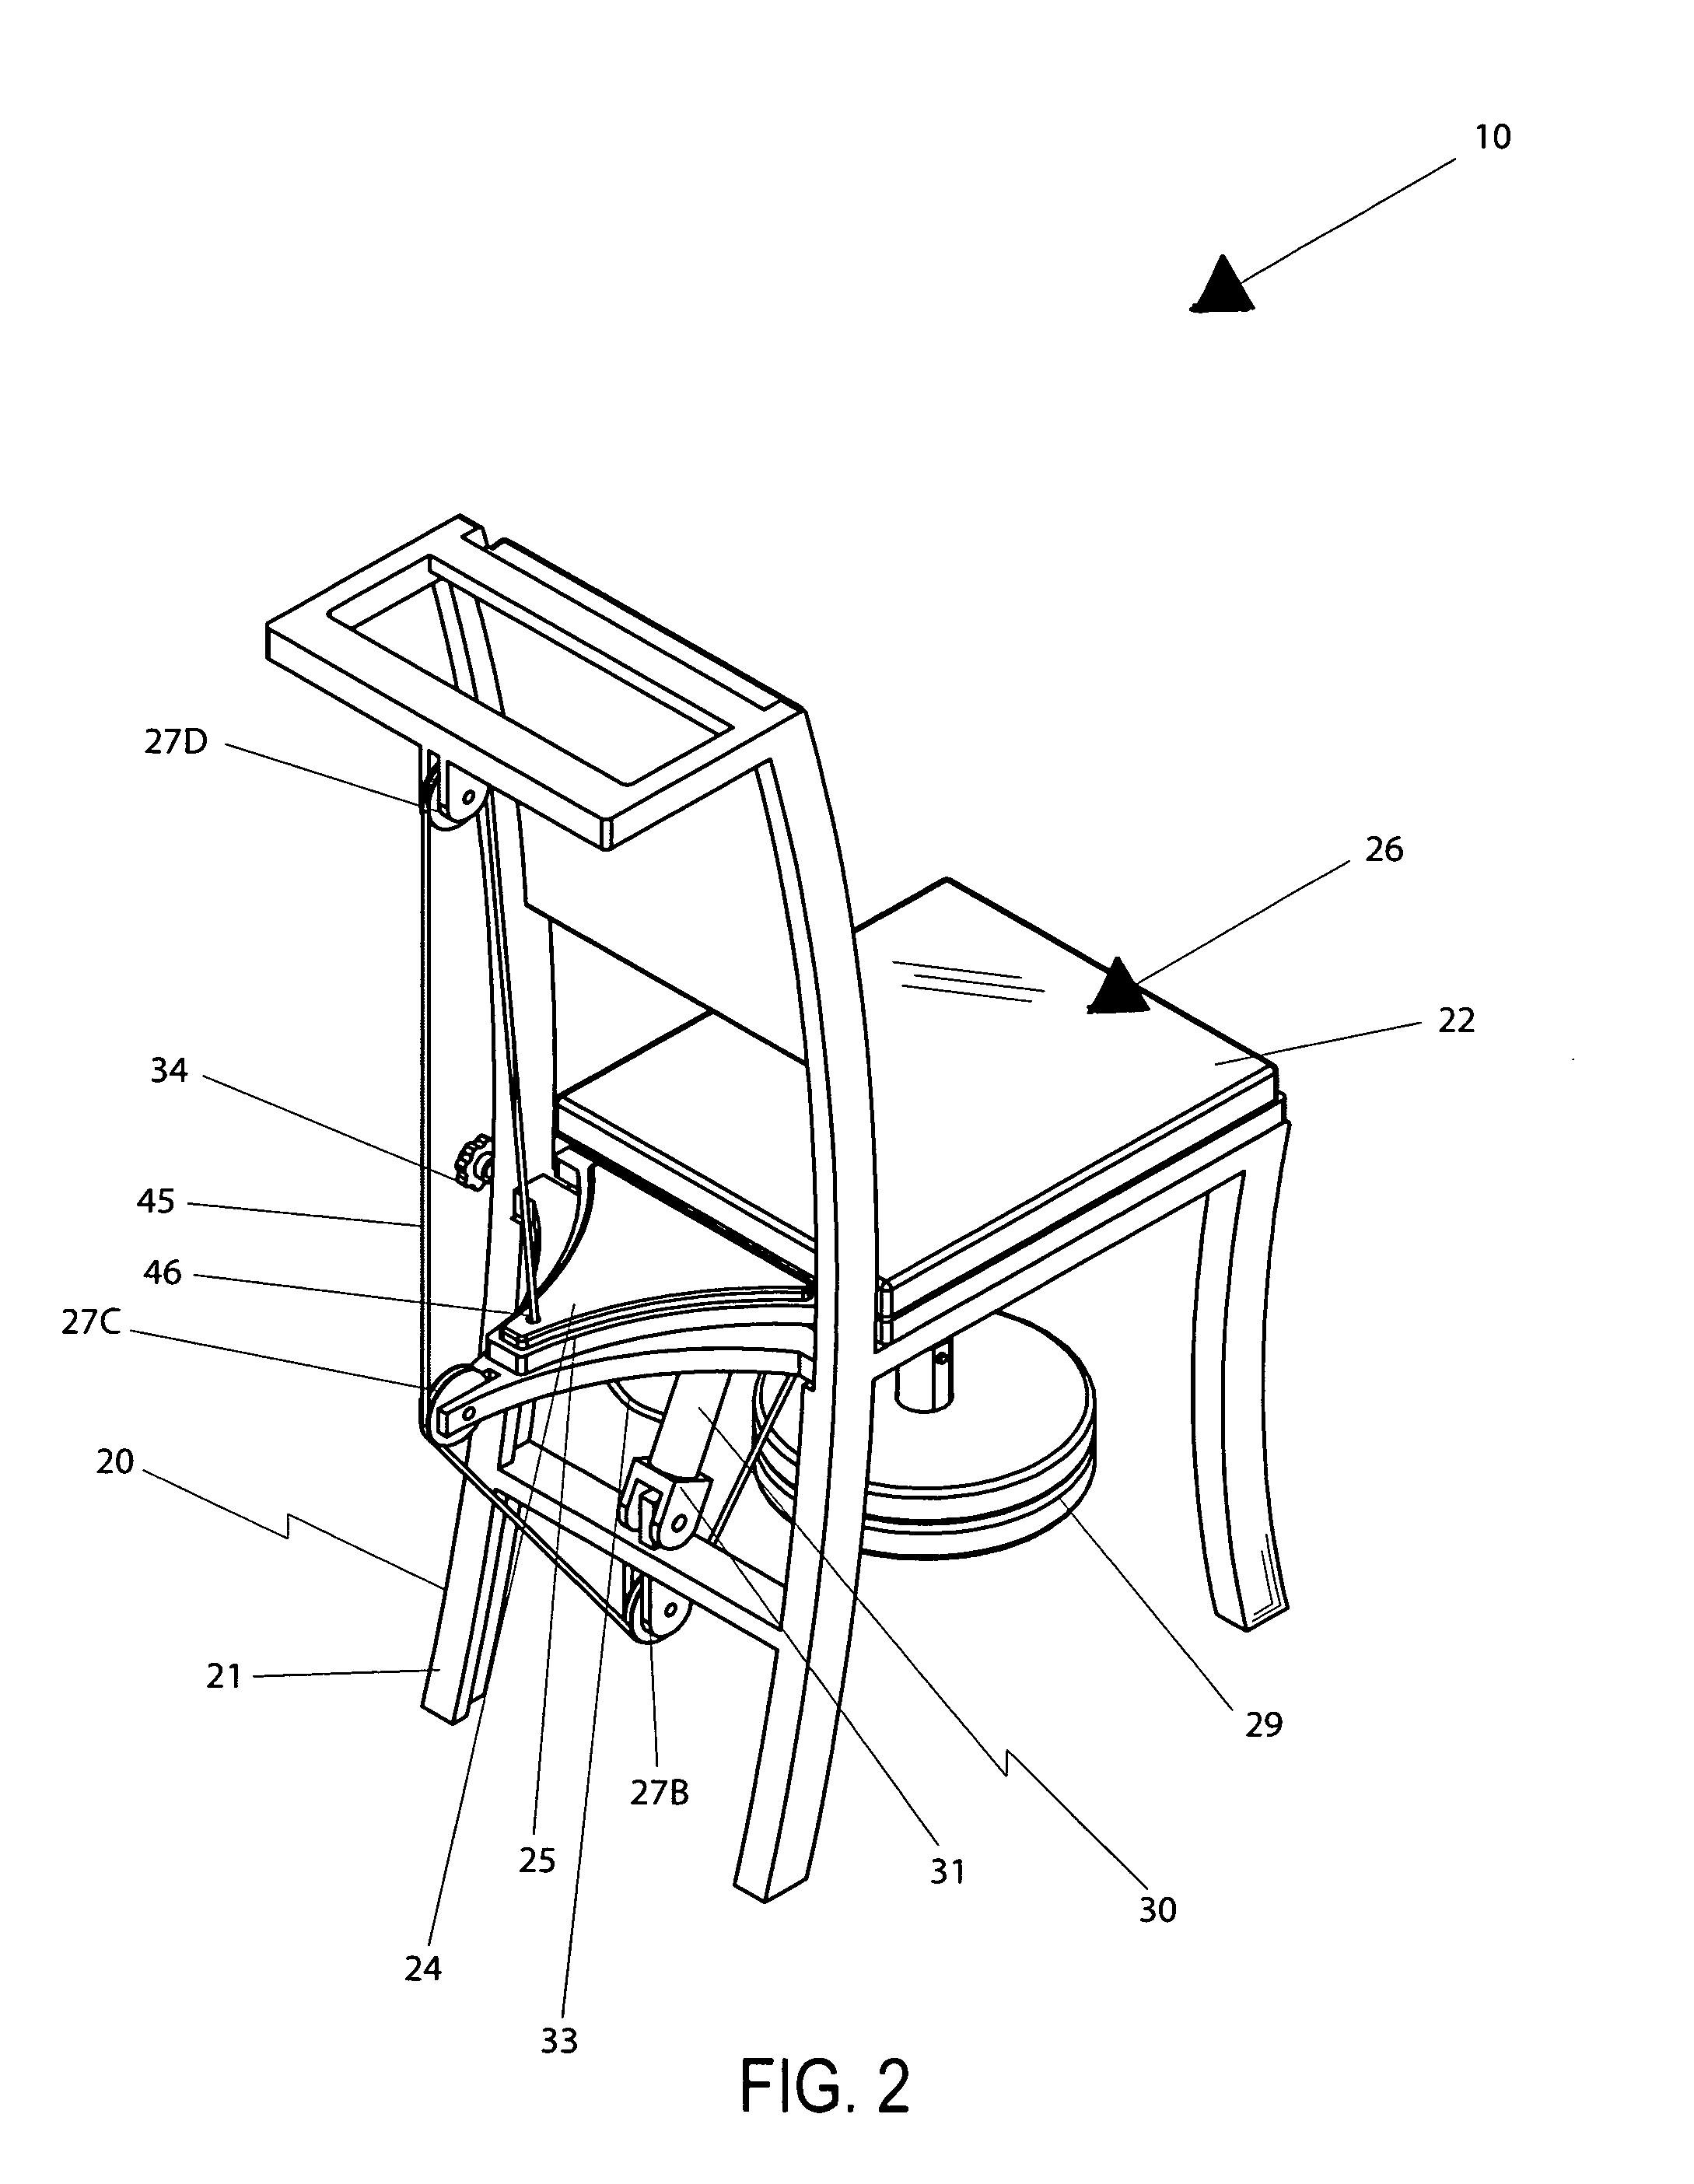 Combination ergonomic chair and seat pivoting mechanism